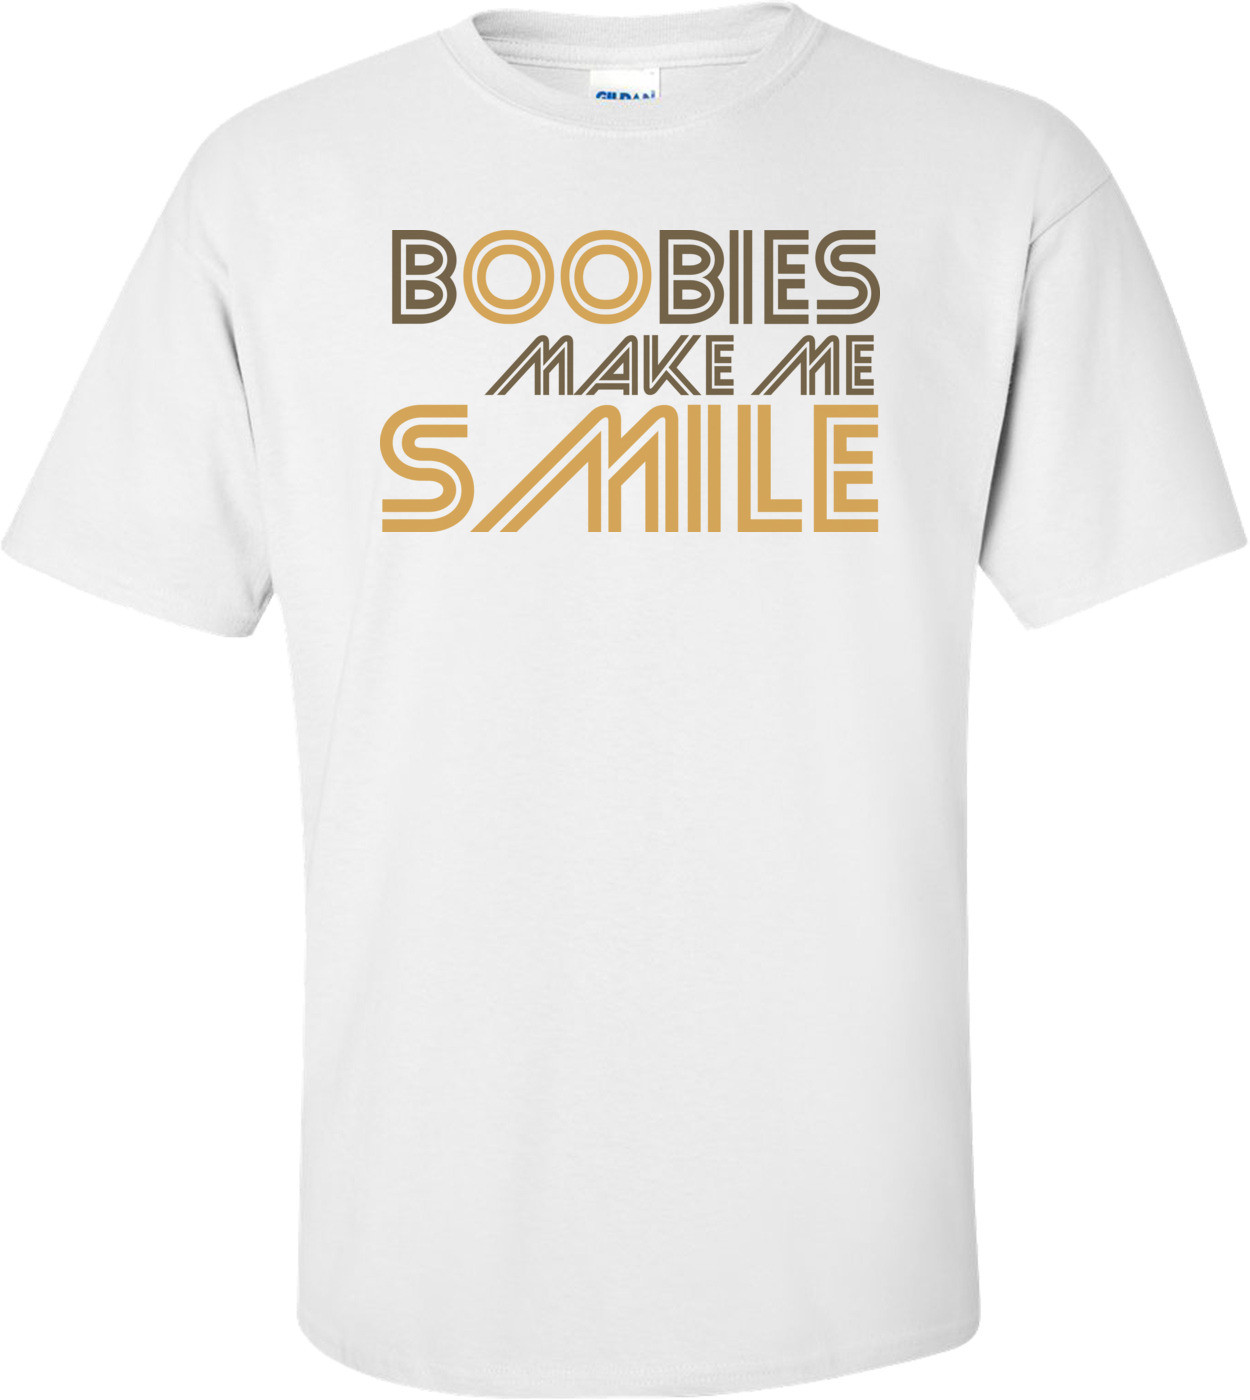 Boobies Make Me Smile Funny T-shirt